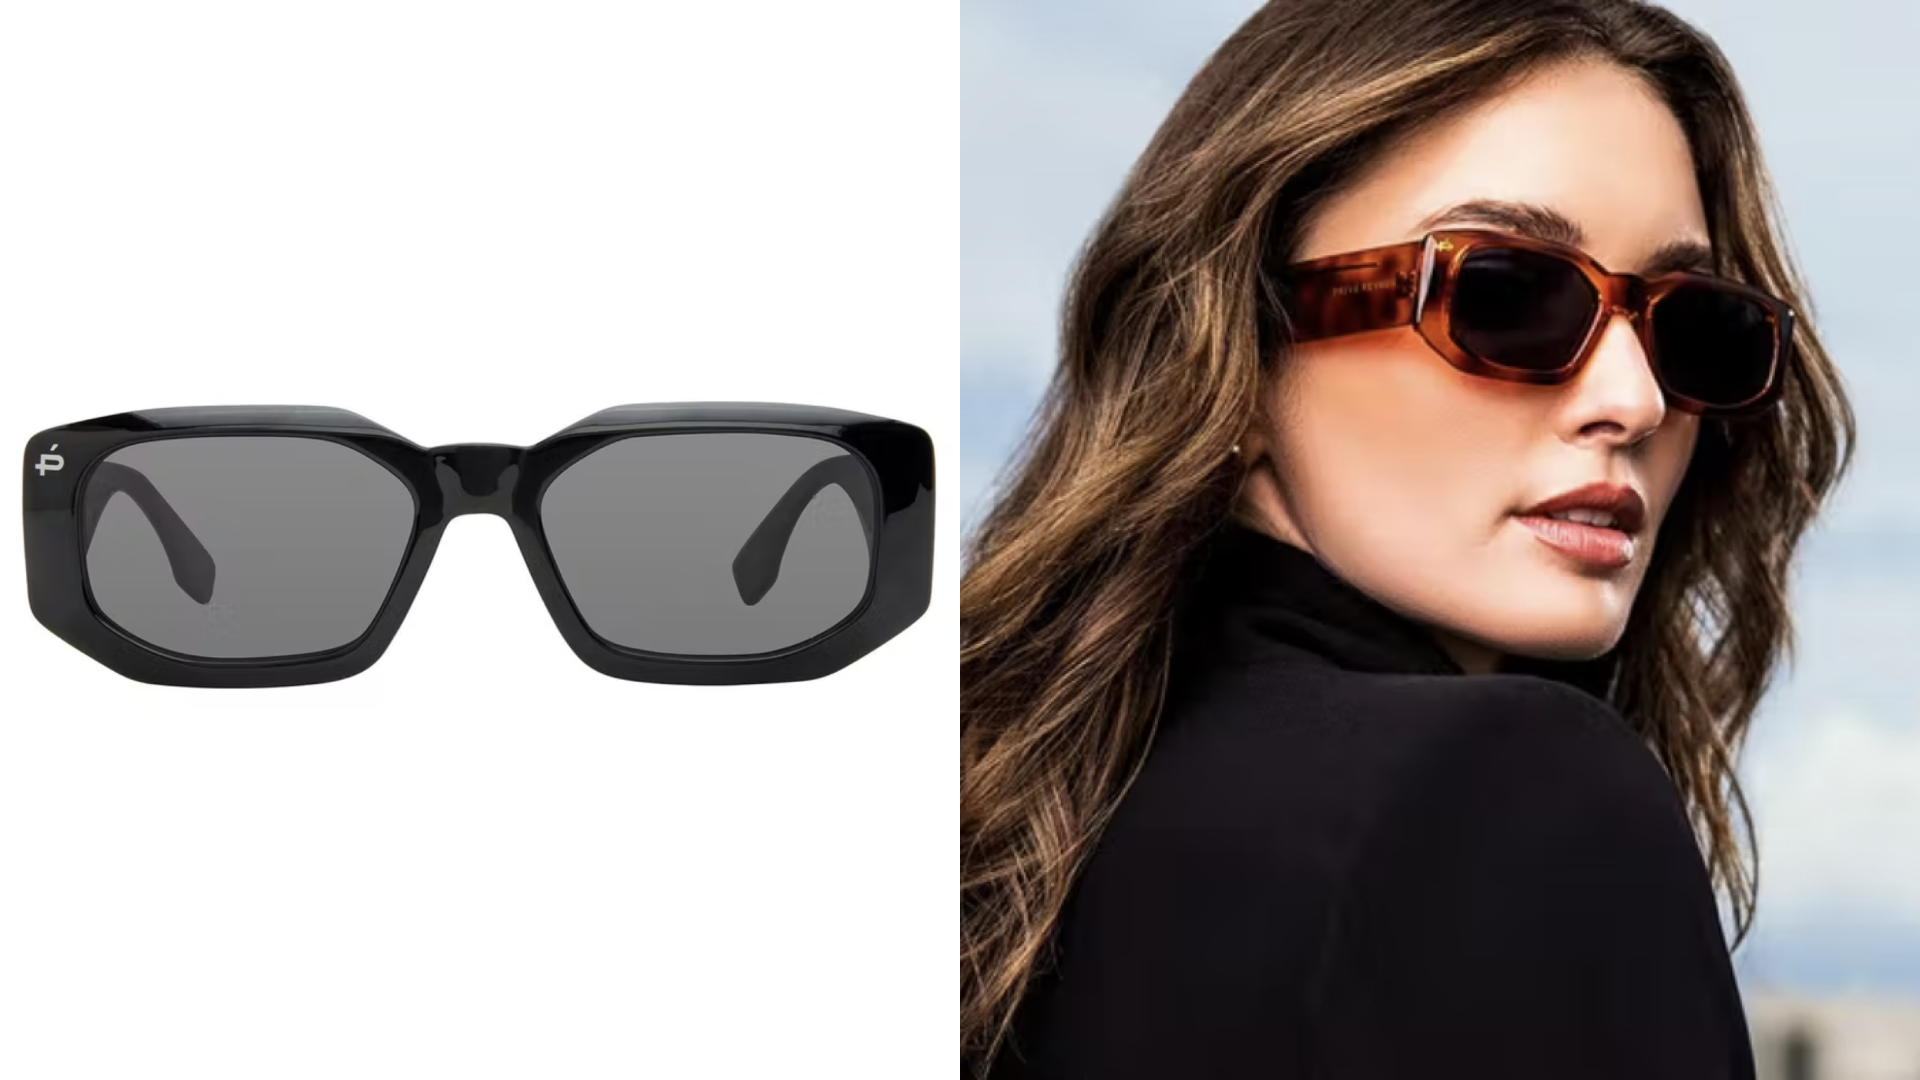 Cheap sunglasses for women 